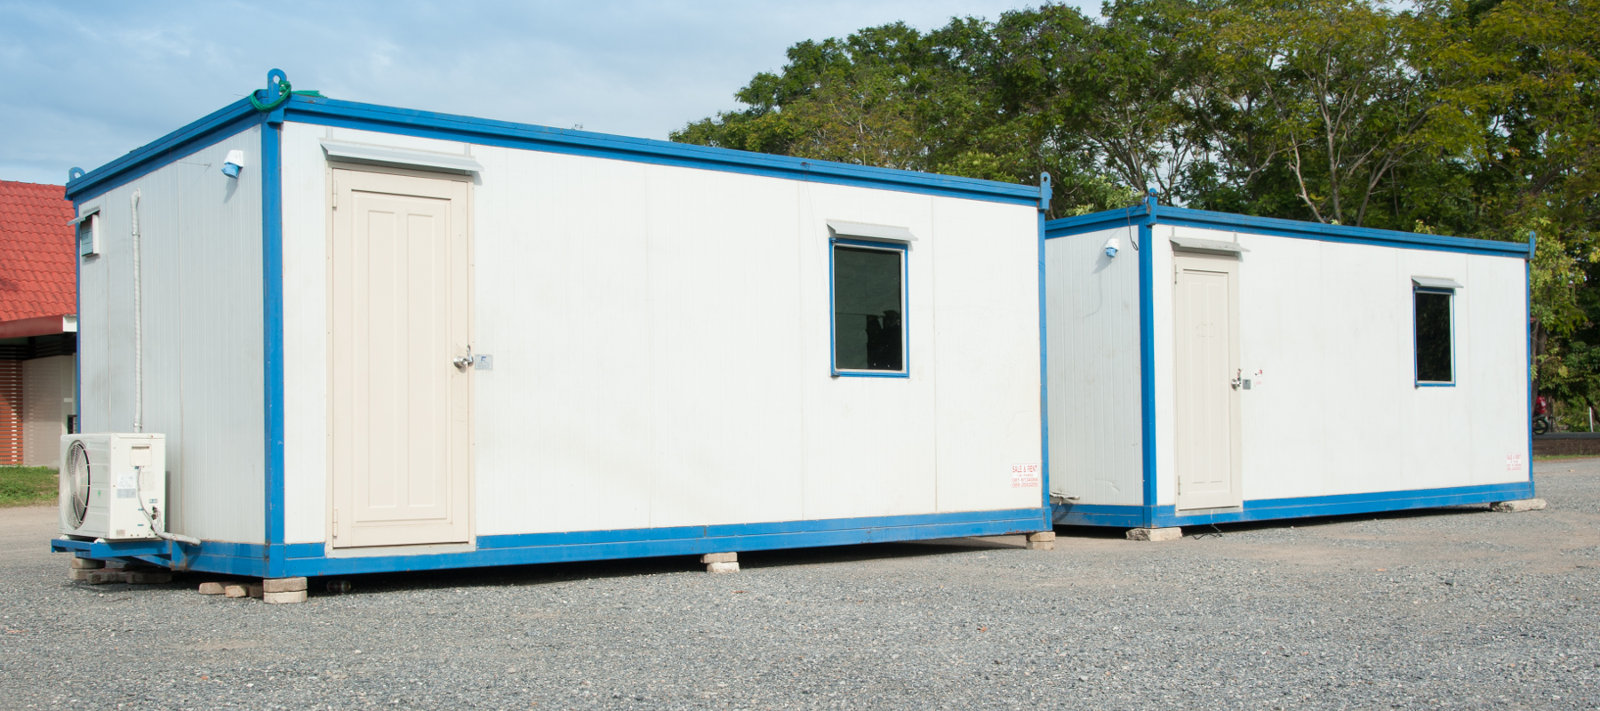 mobile office trailer sales in Zephyr Cove, NV